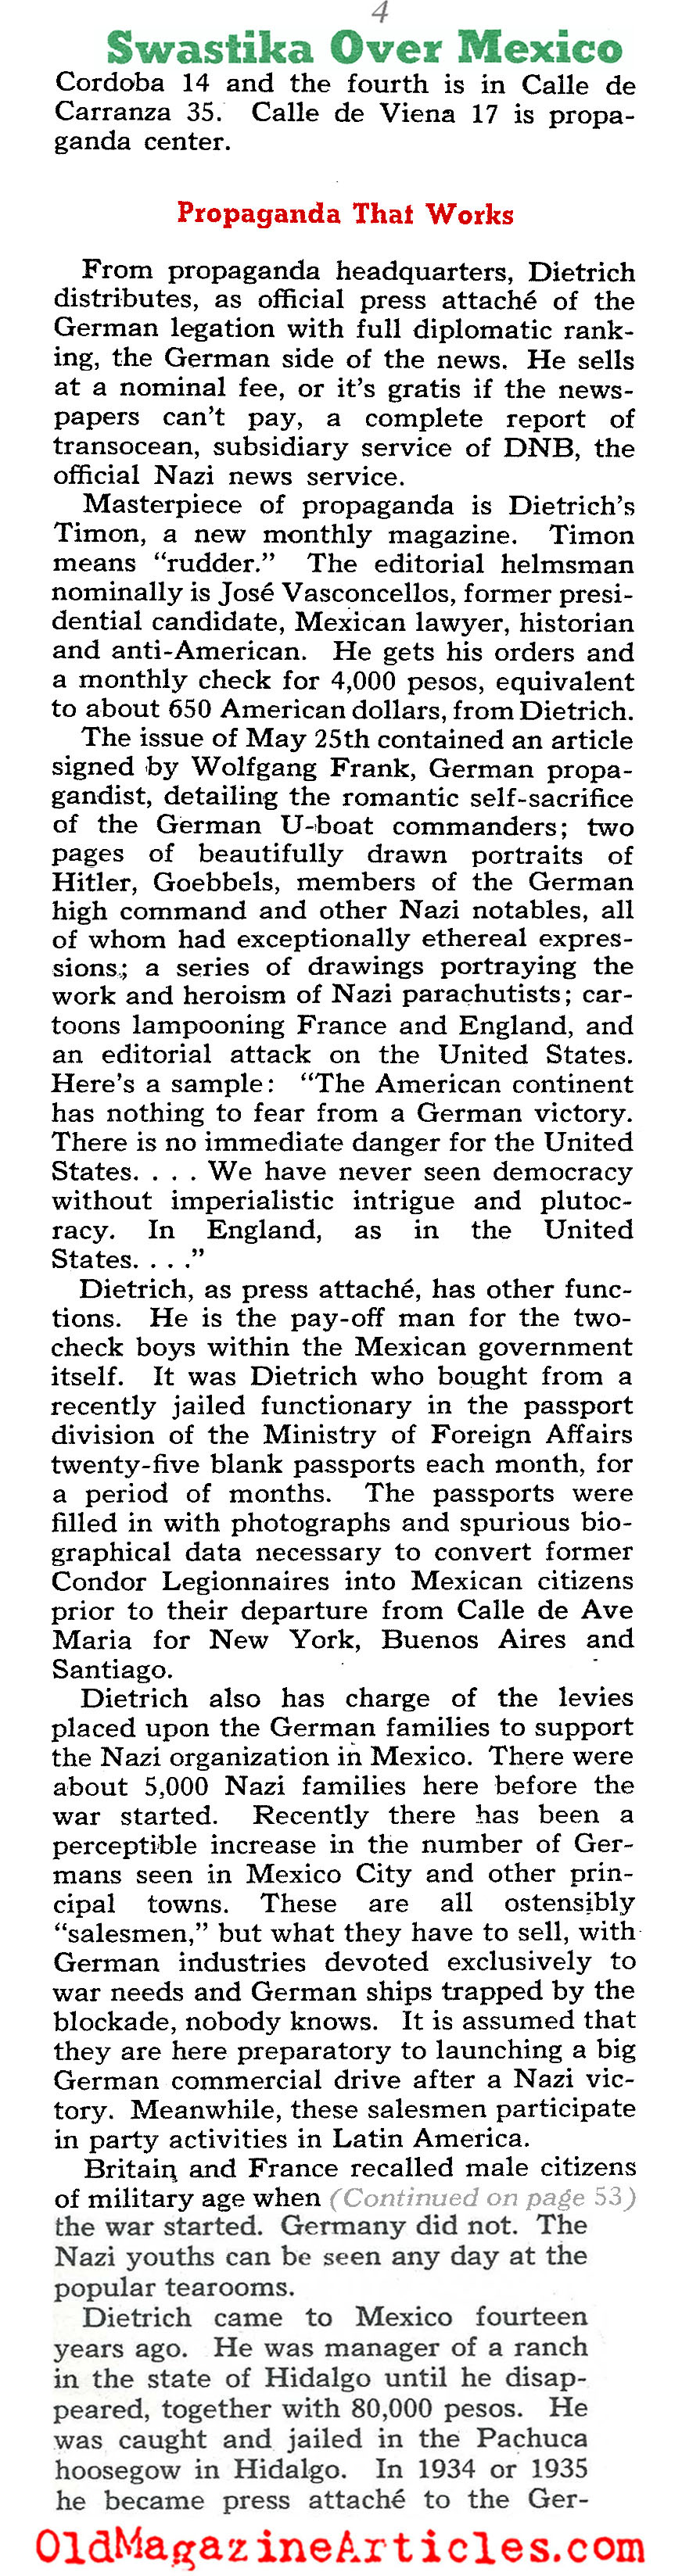 Hitler's Men in Mexico (Collier's Magazine, 1940)